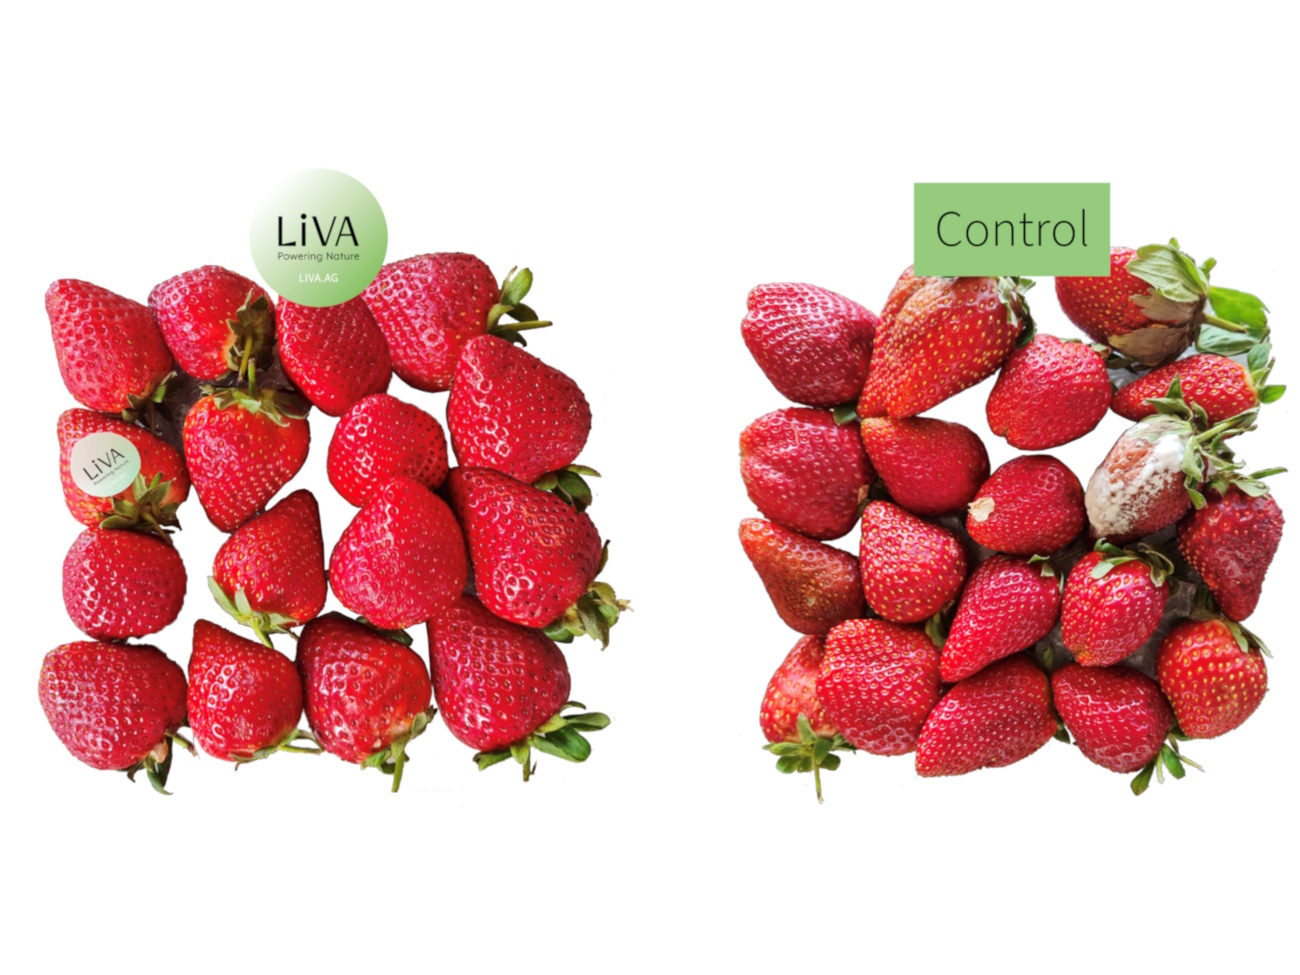 Strawberries kept fresh with LiVa technology